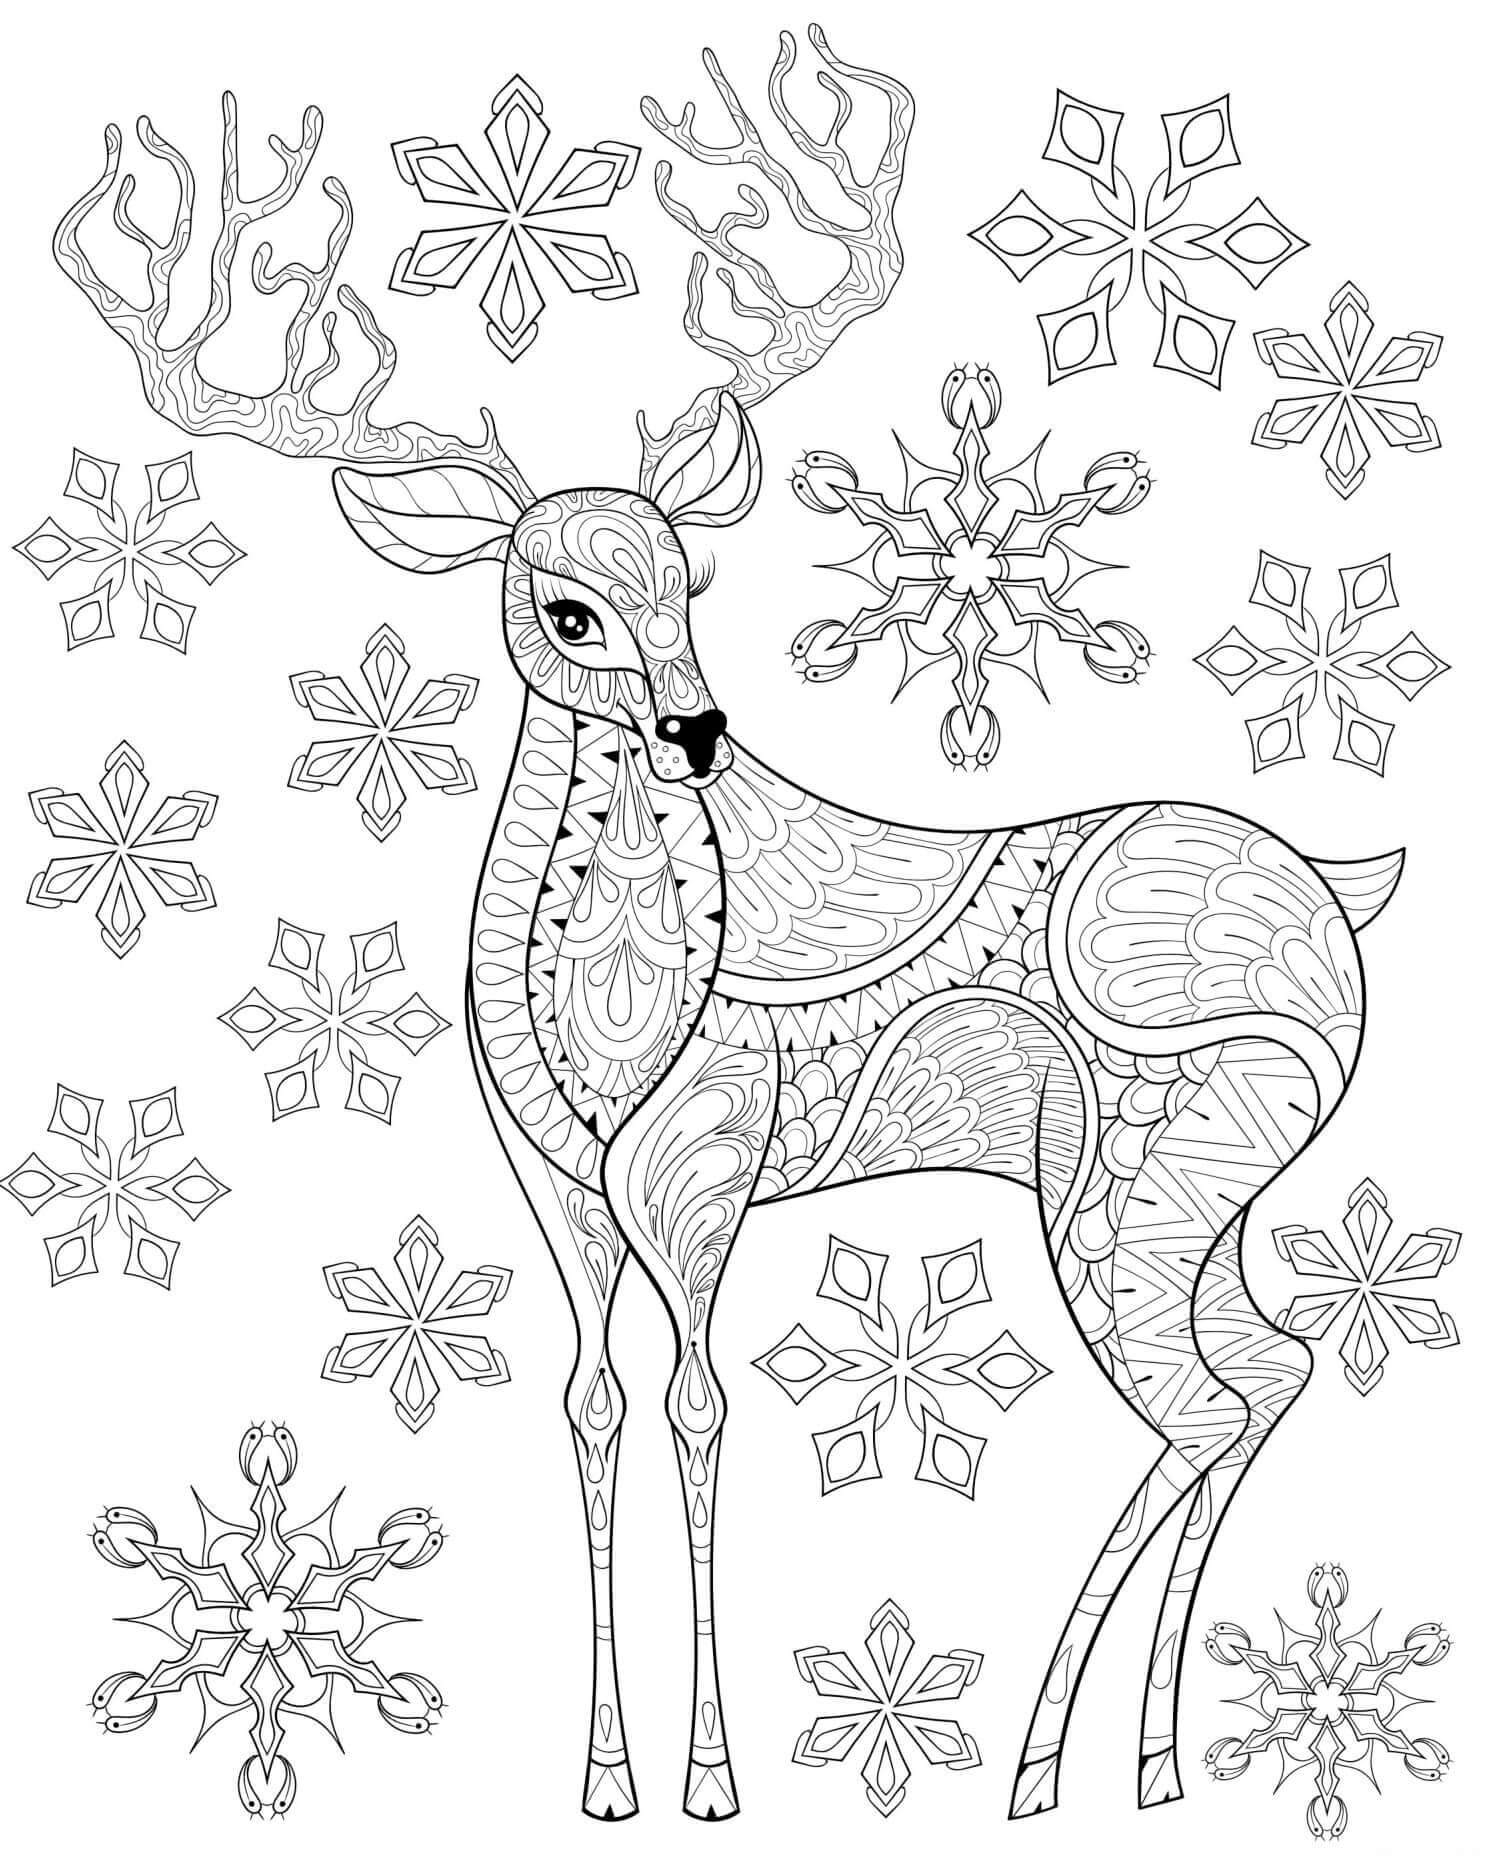 Mandala Reindeer Coloring Page - Sheet 3 Mandalas